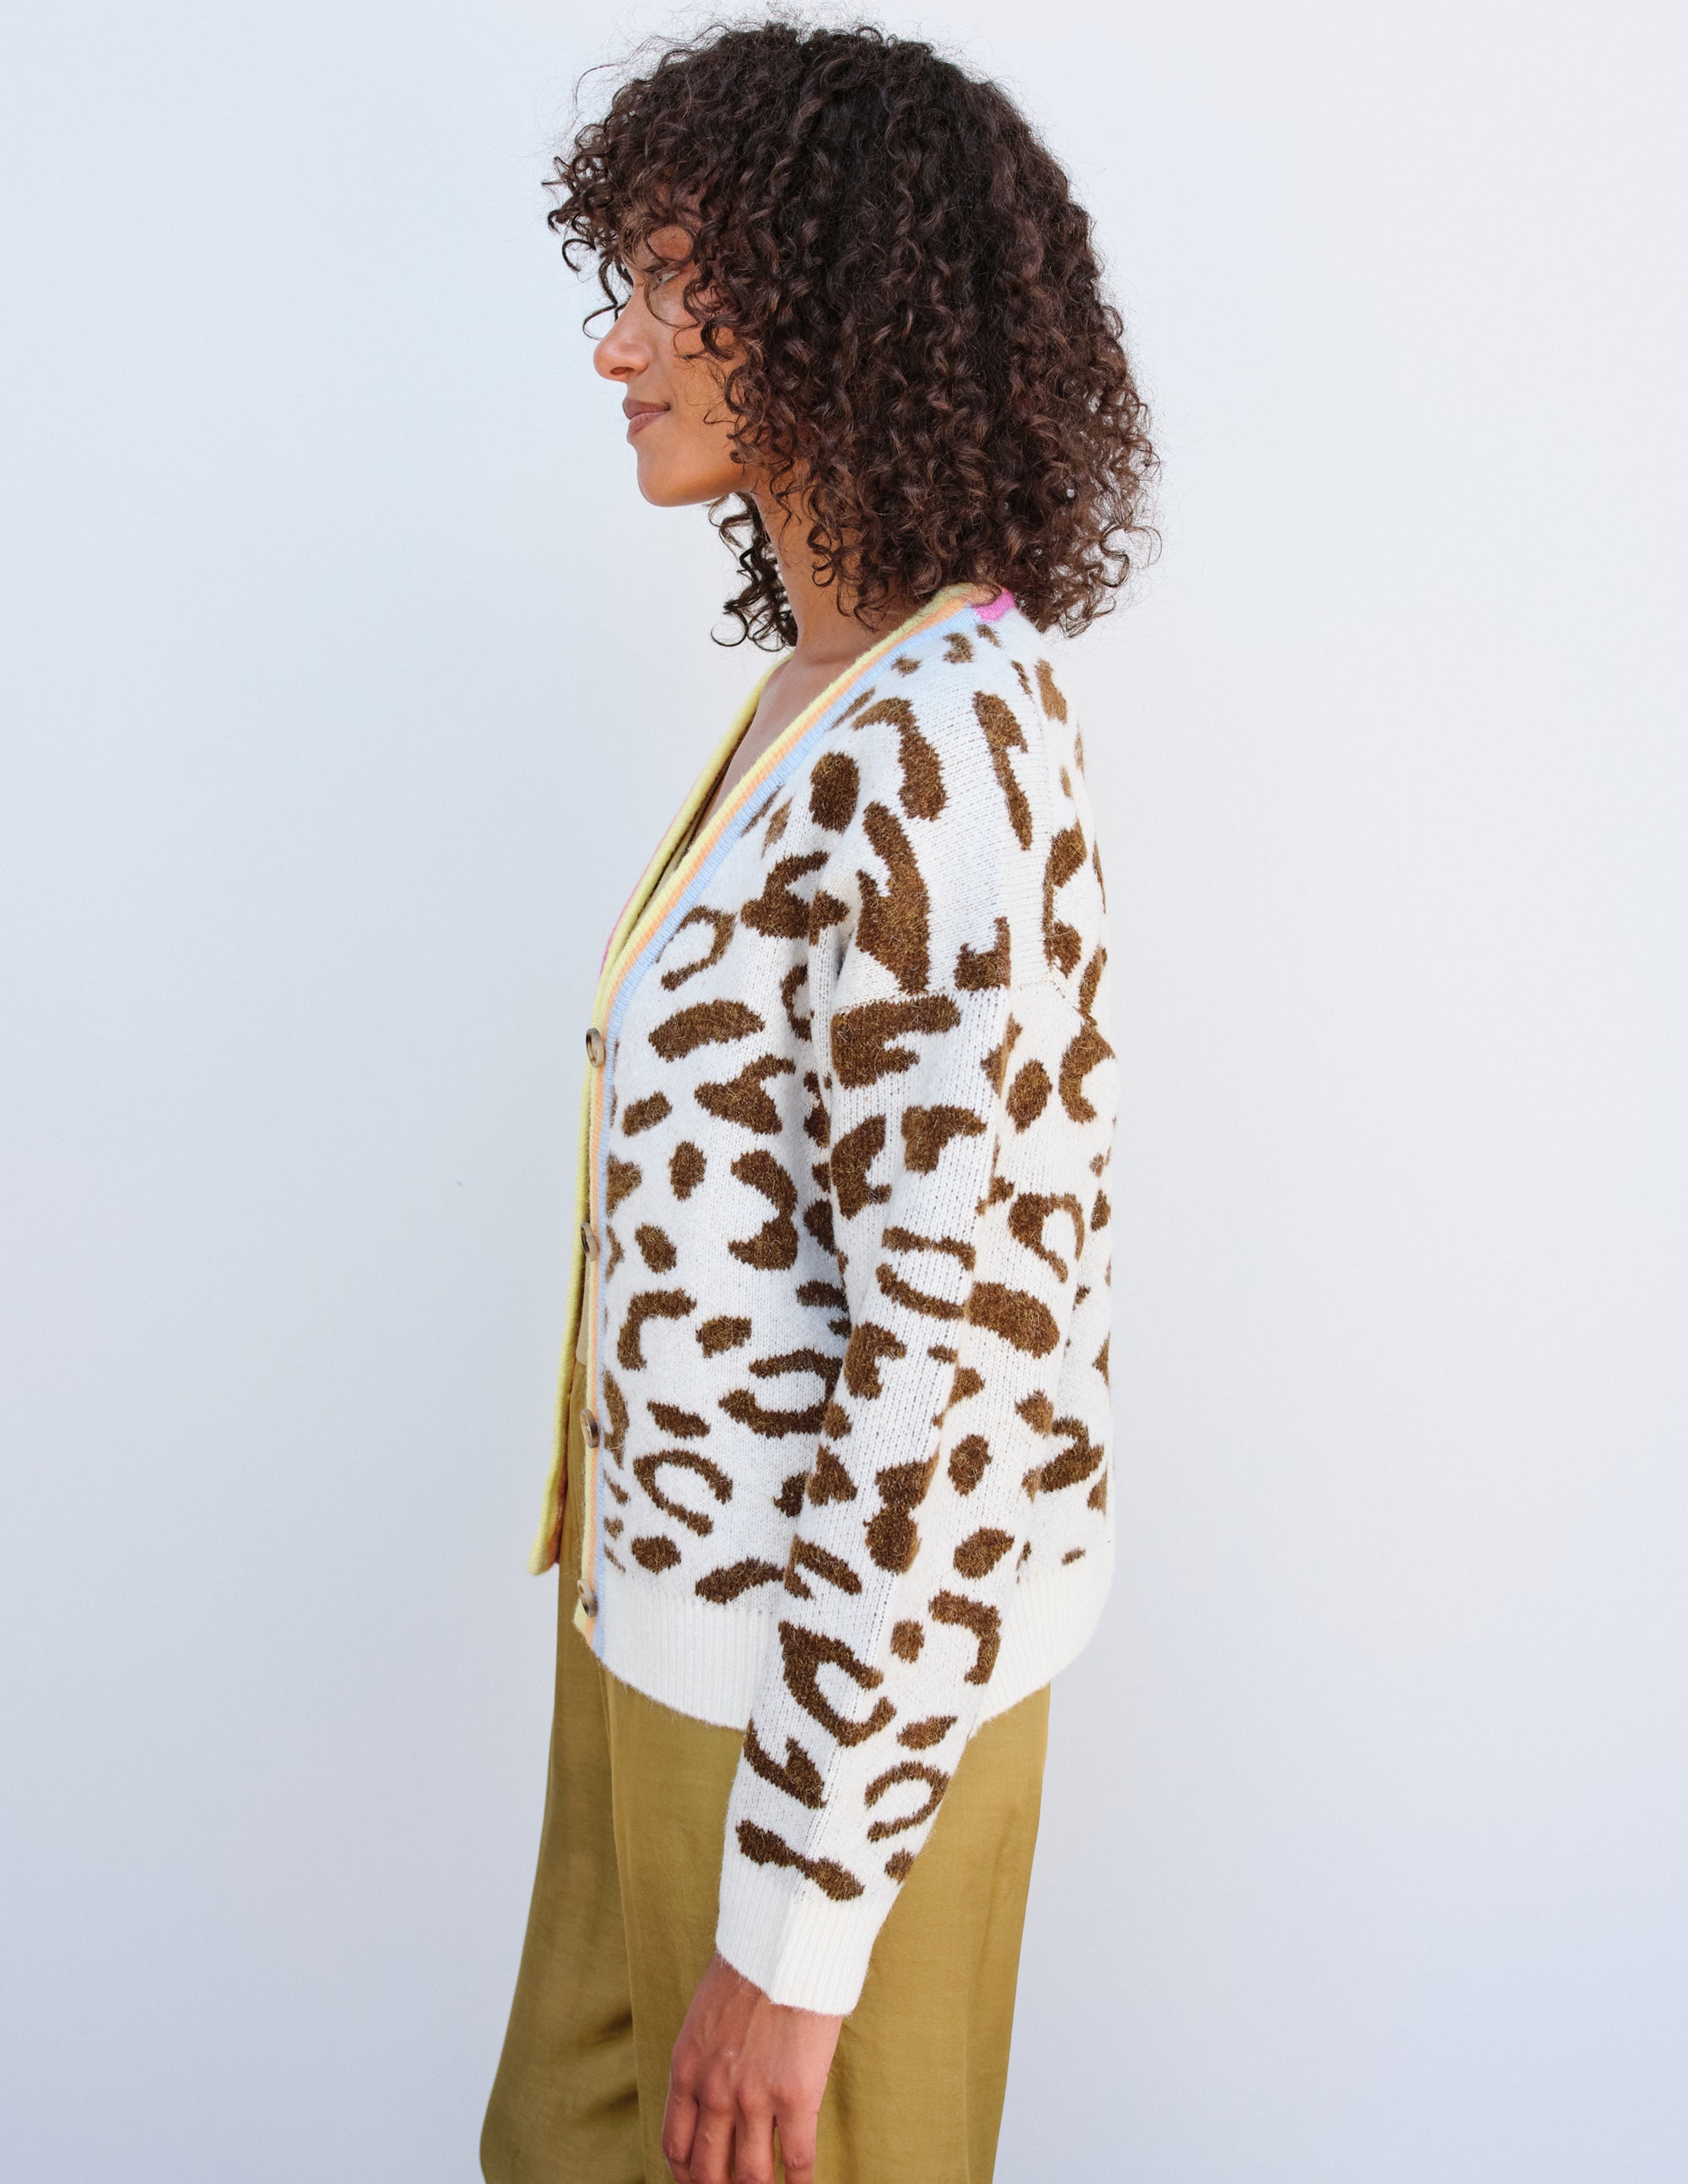 Sundry Leopard Boxy Cardigan in Cream/Sorbet Leopard